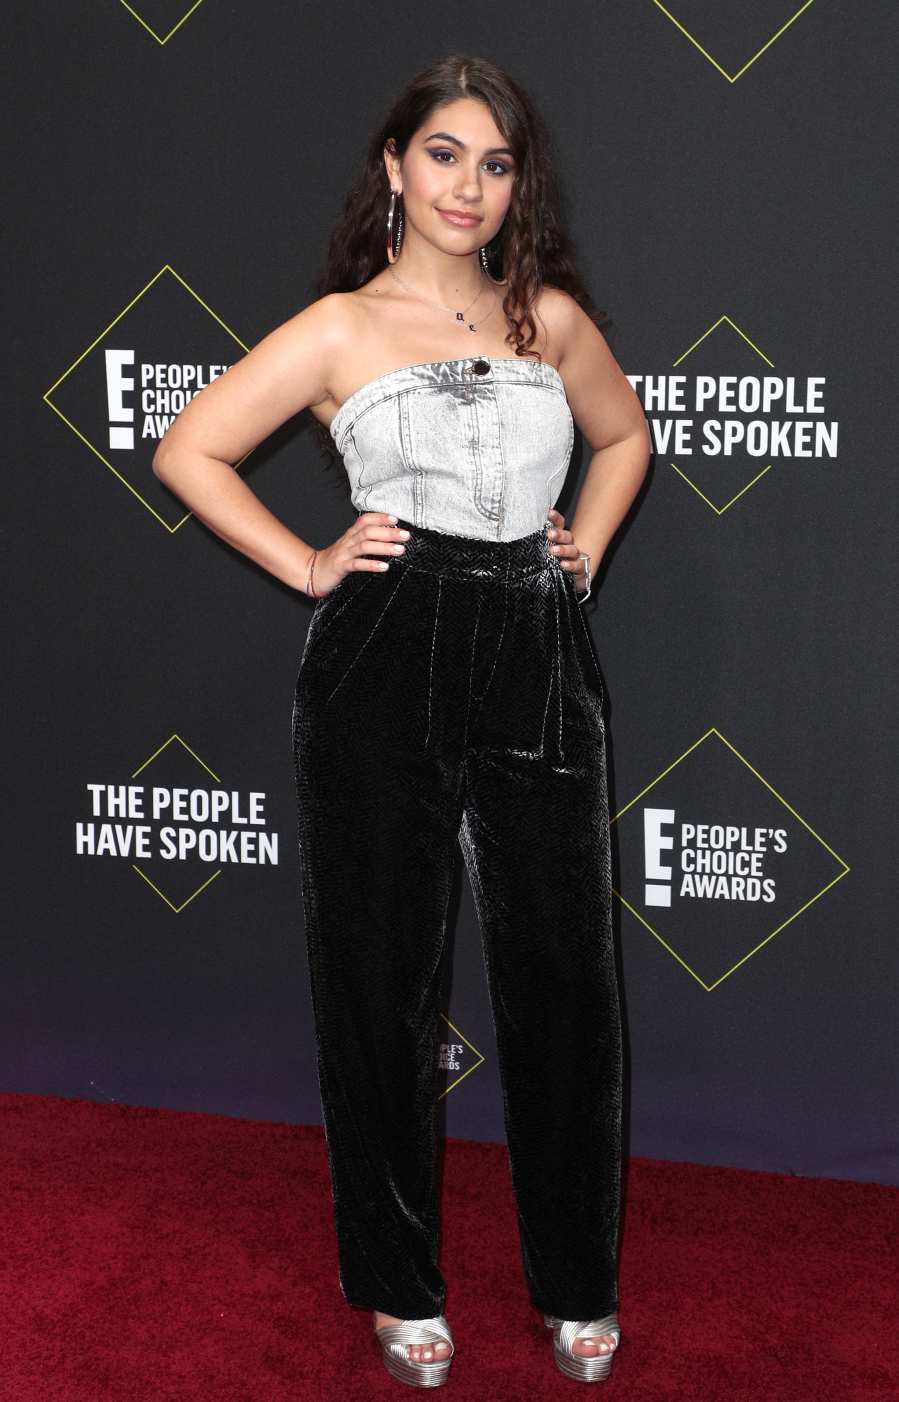 2019 People's Choice Awards - Alessia Cara